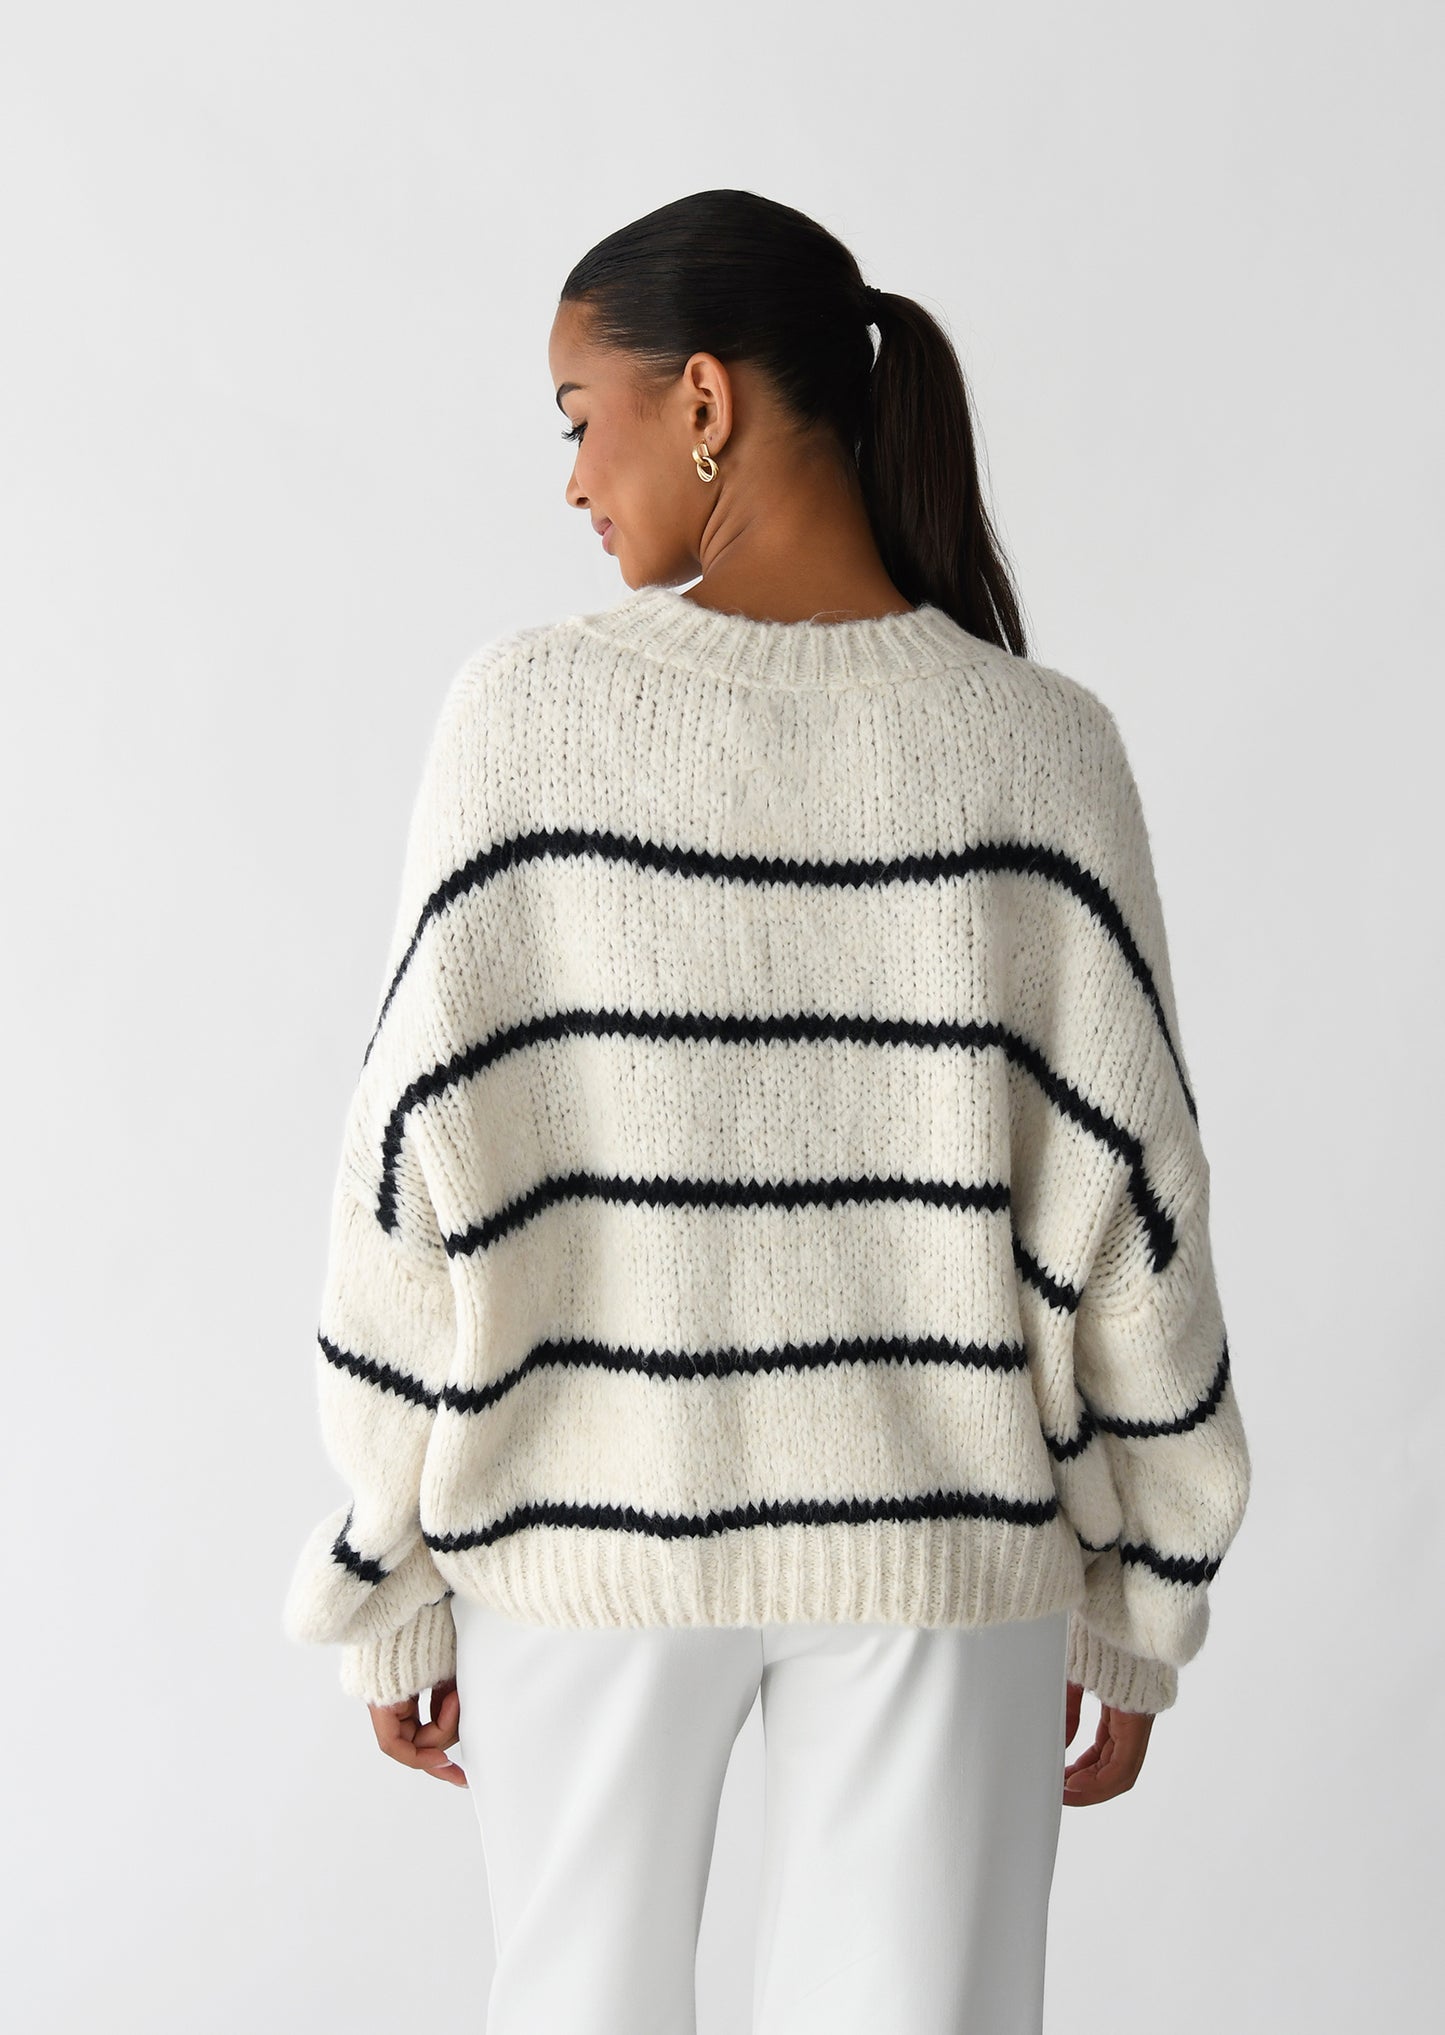 Striped knit sweater wool blend